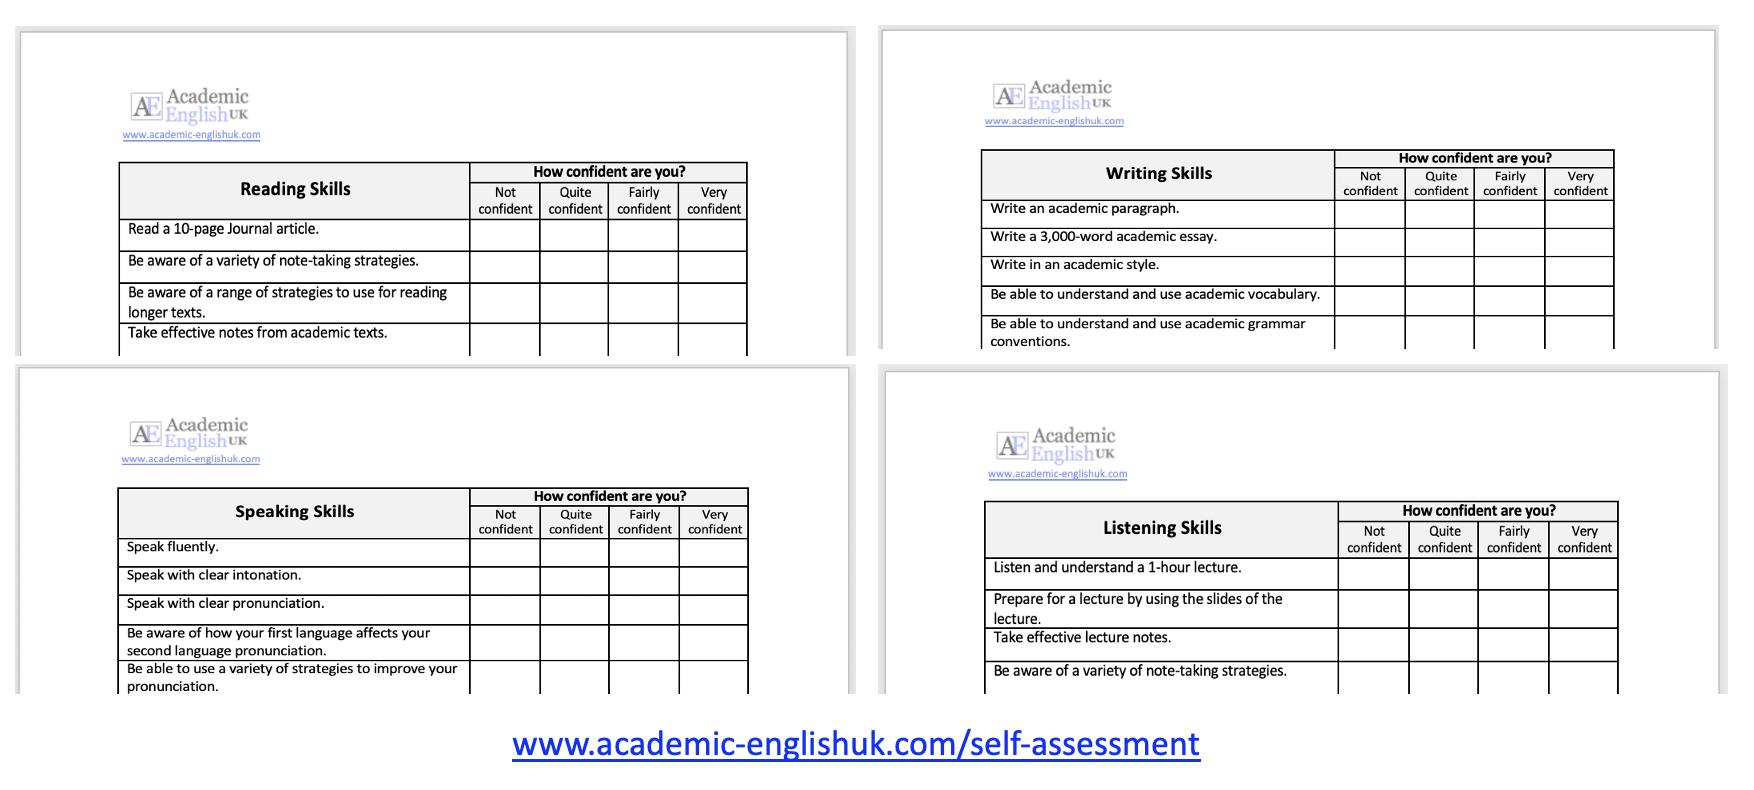 Self-assessment questionnaires